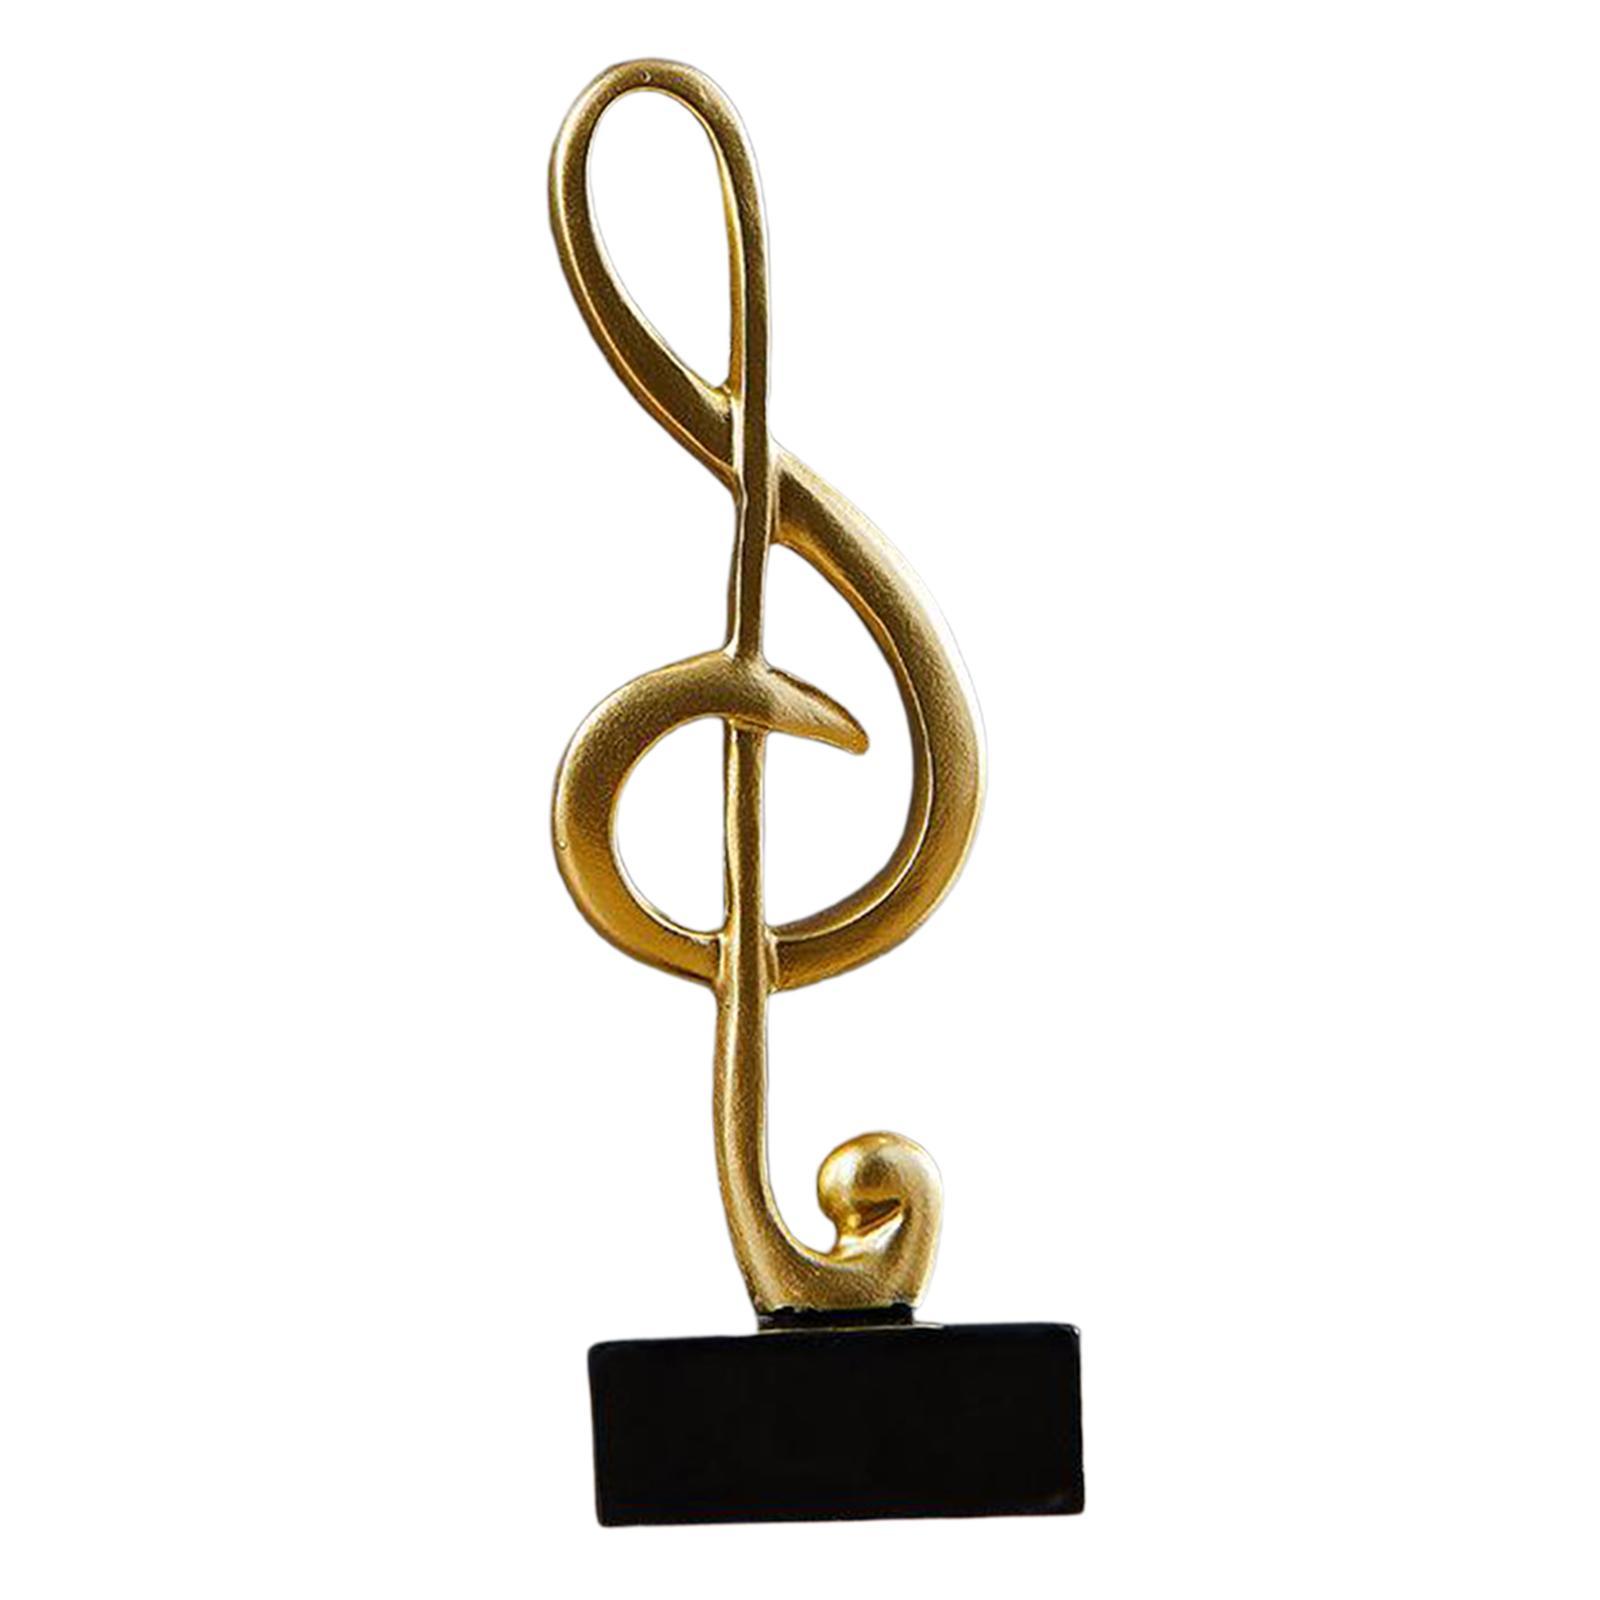 Music Sculpture Ornament Figurine Statue Photo Props Office Desktop